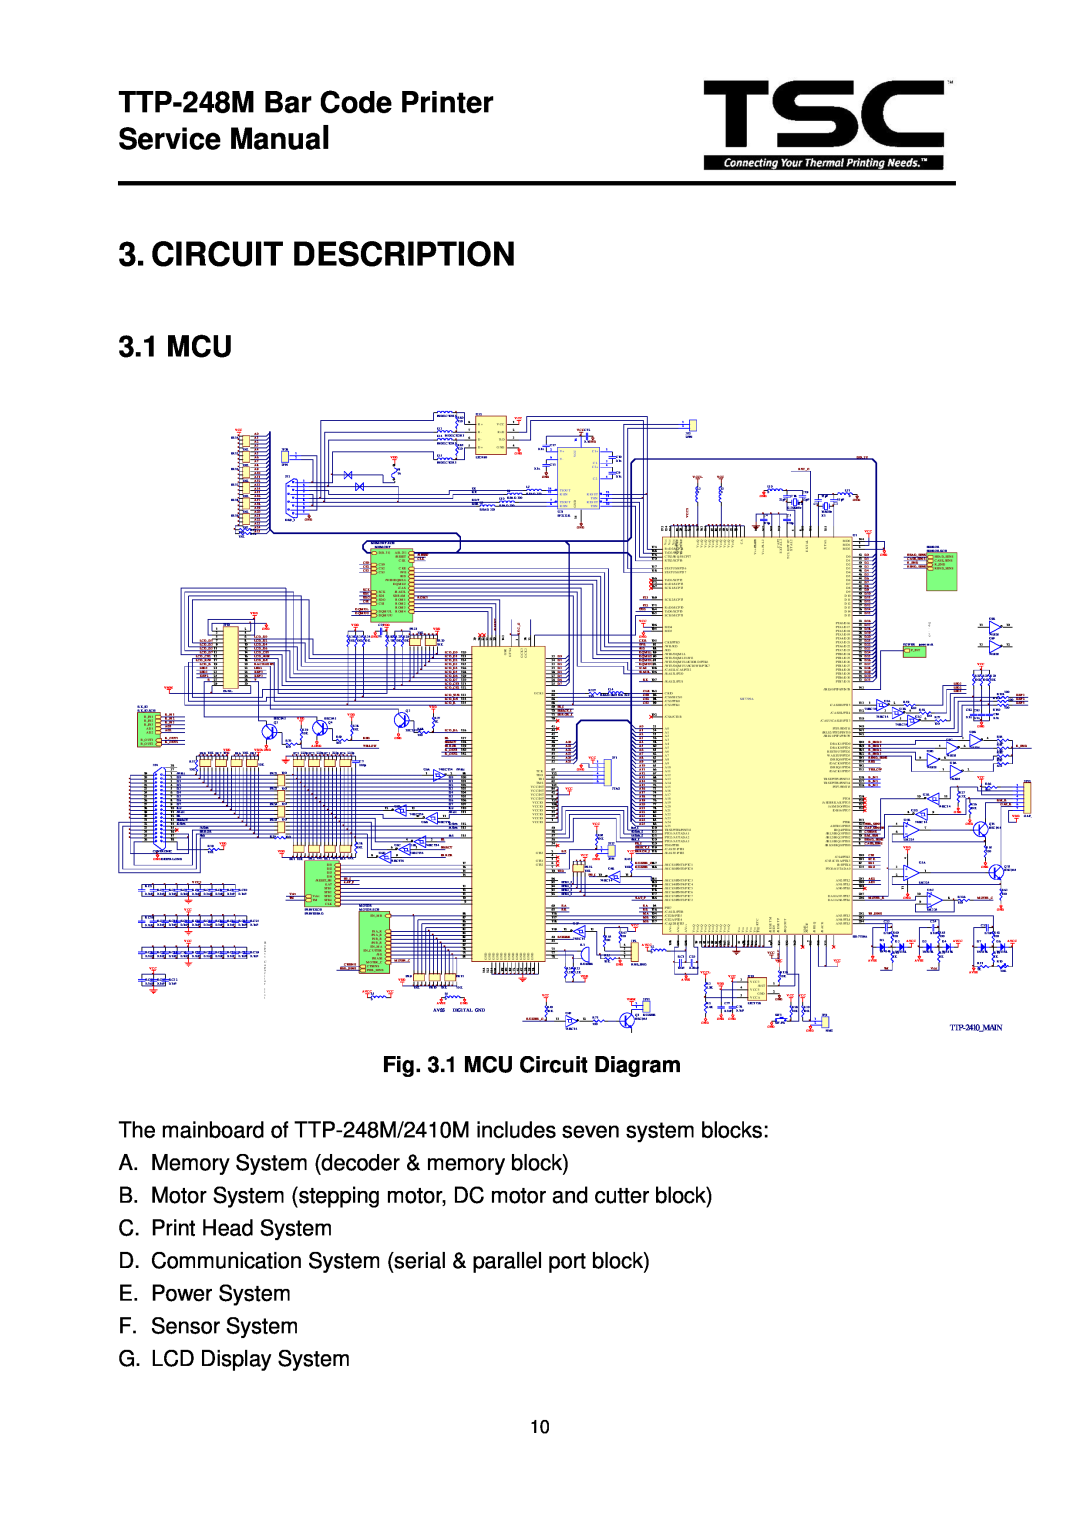 The Speaker Company TTP 248M Circuit Description, 3.1 MCU, 1 MCU Circuit Diagram, TTP-248M Bar Code Printer Service Manual 